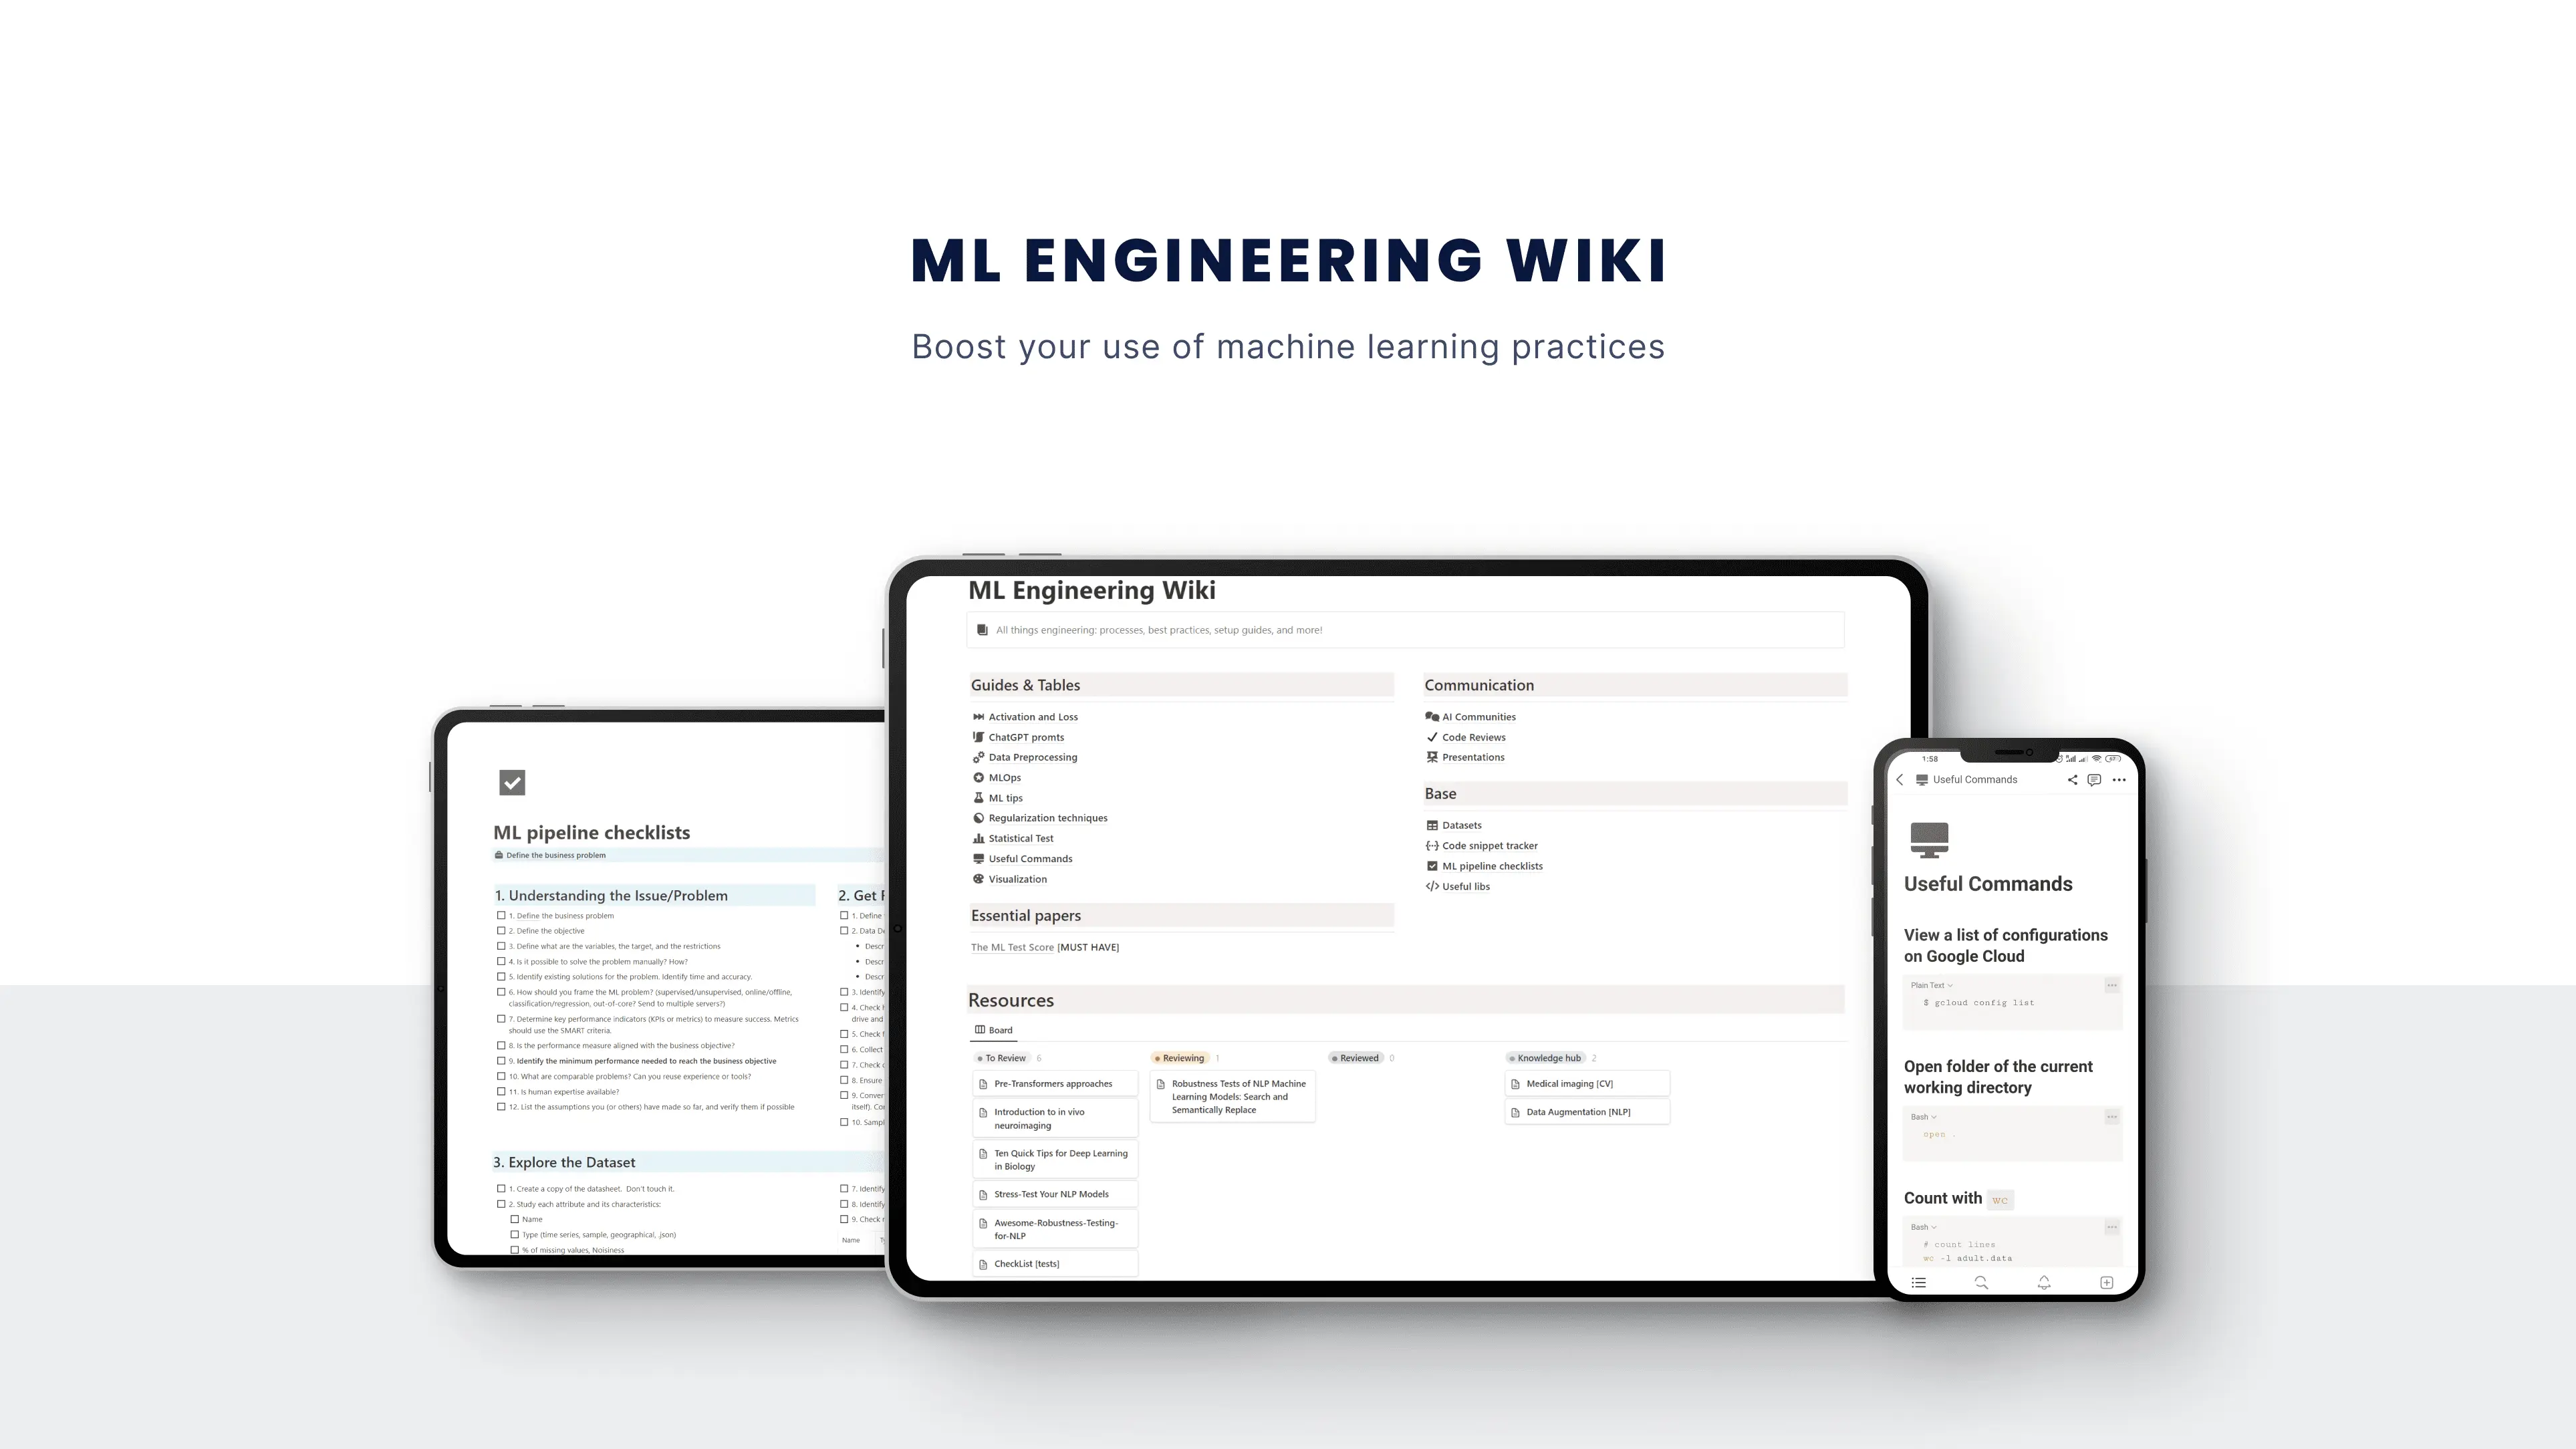 Ml Engineering Wiki image